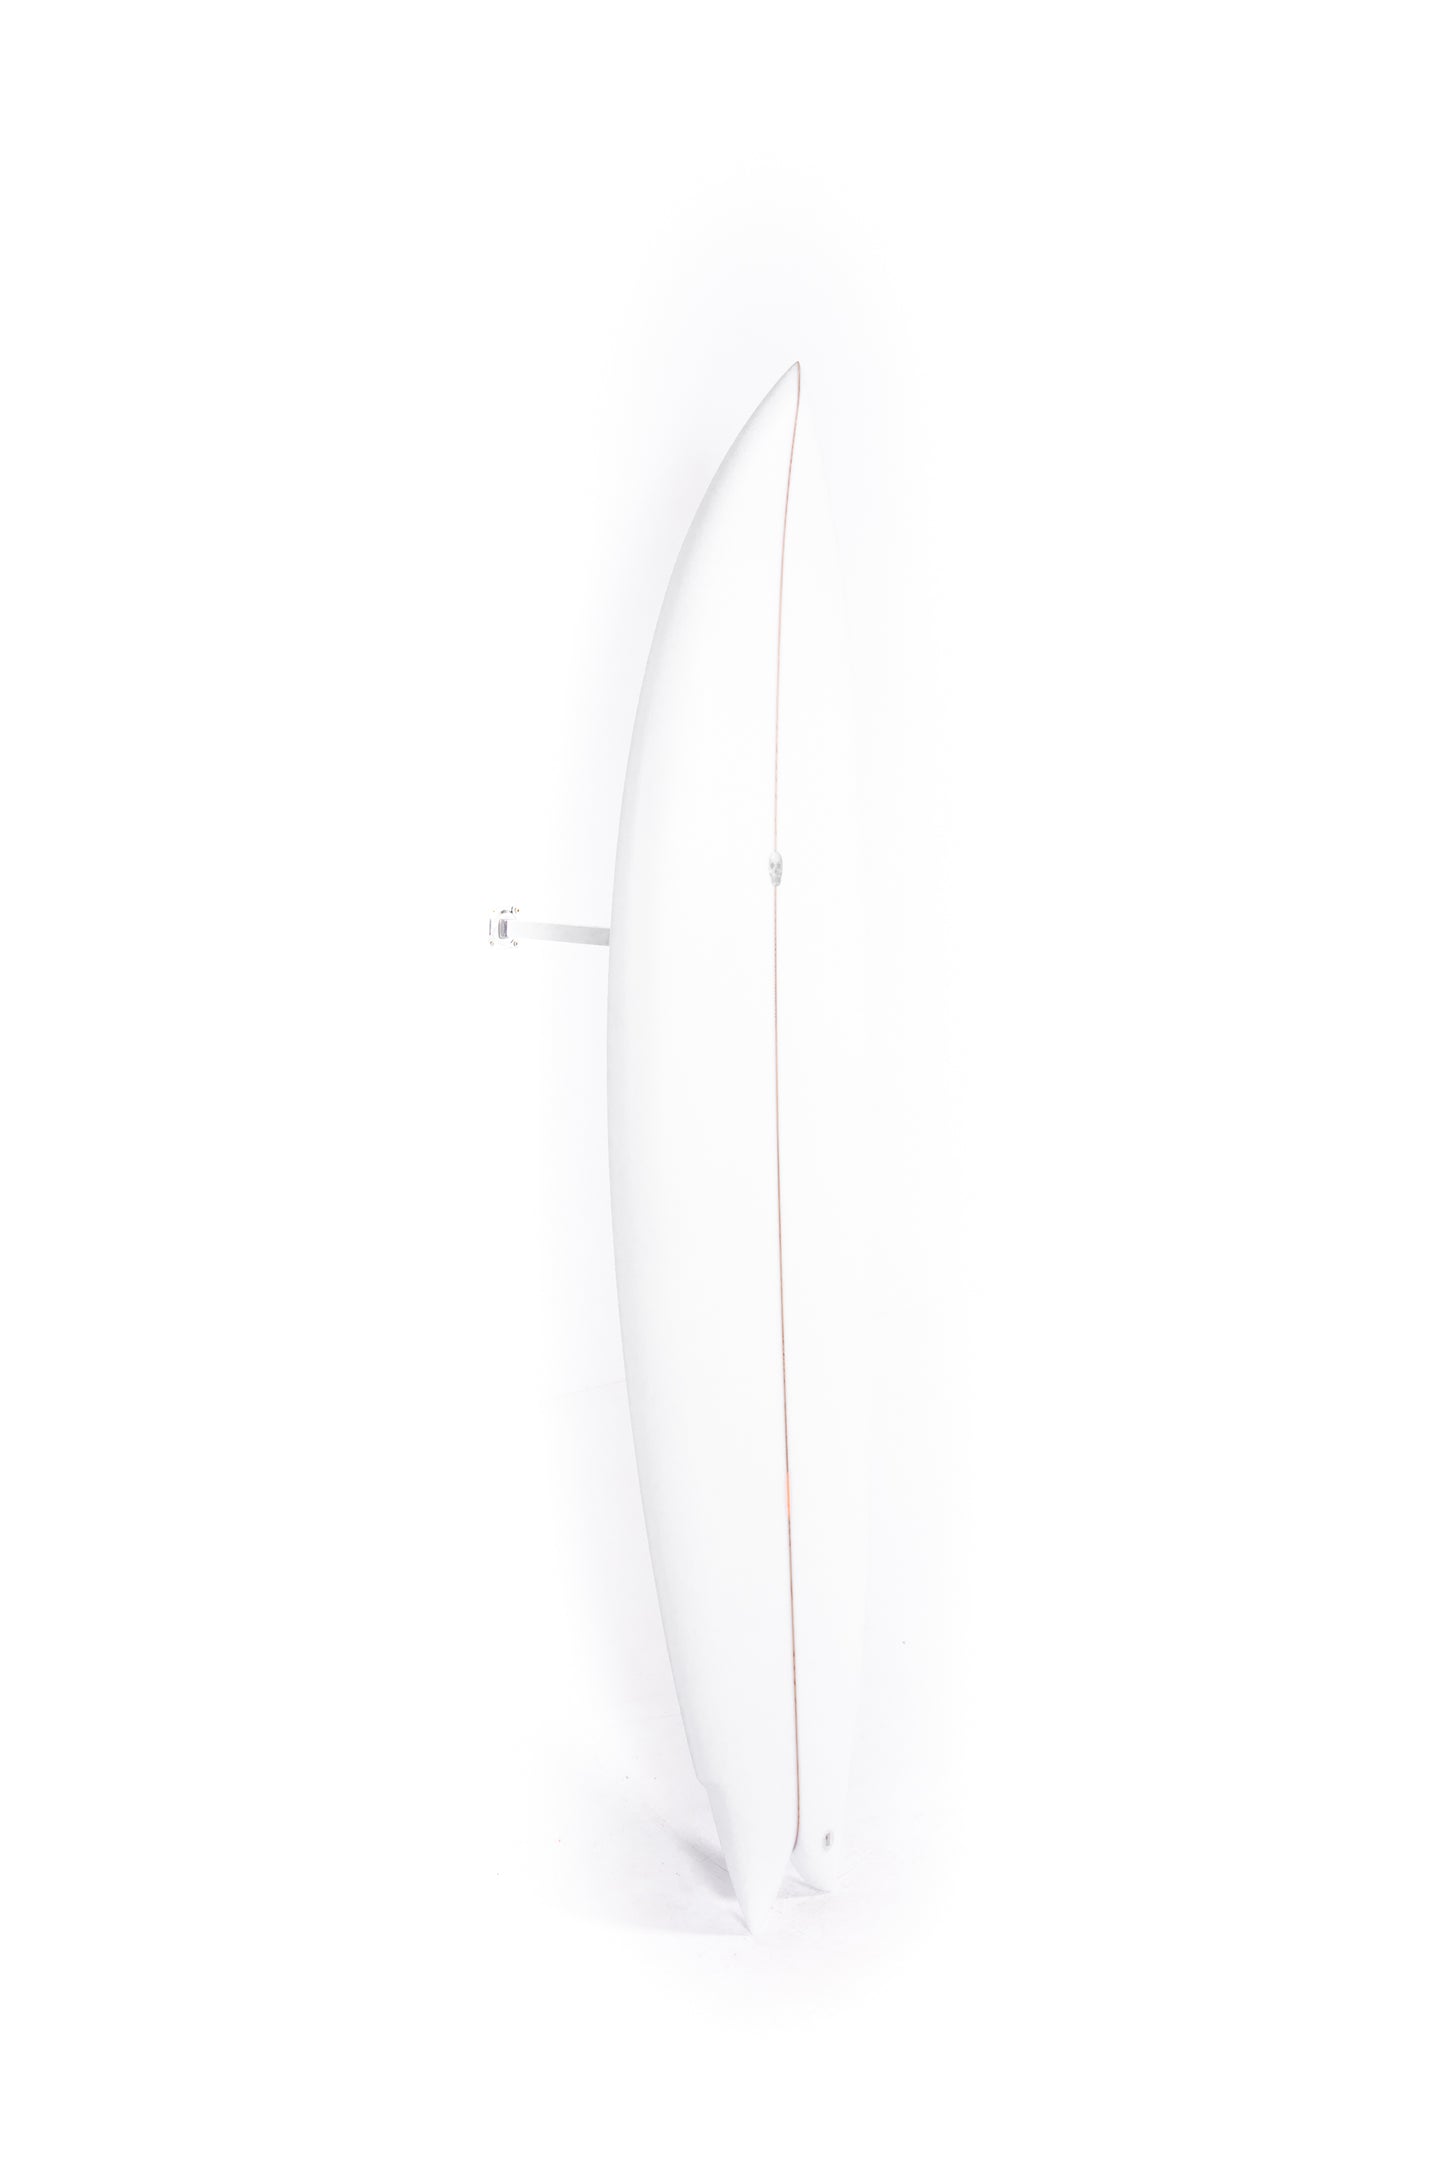 
                  
                    Pukas Surf Shop - Christenson Surfboard  - WOLVERINE by Chris Christenson - 6’6 x 20 3/4 x 2 5/8 x 39,42L - CX05800
                  
                